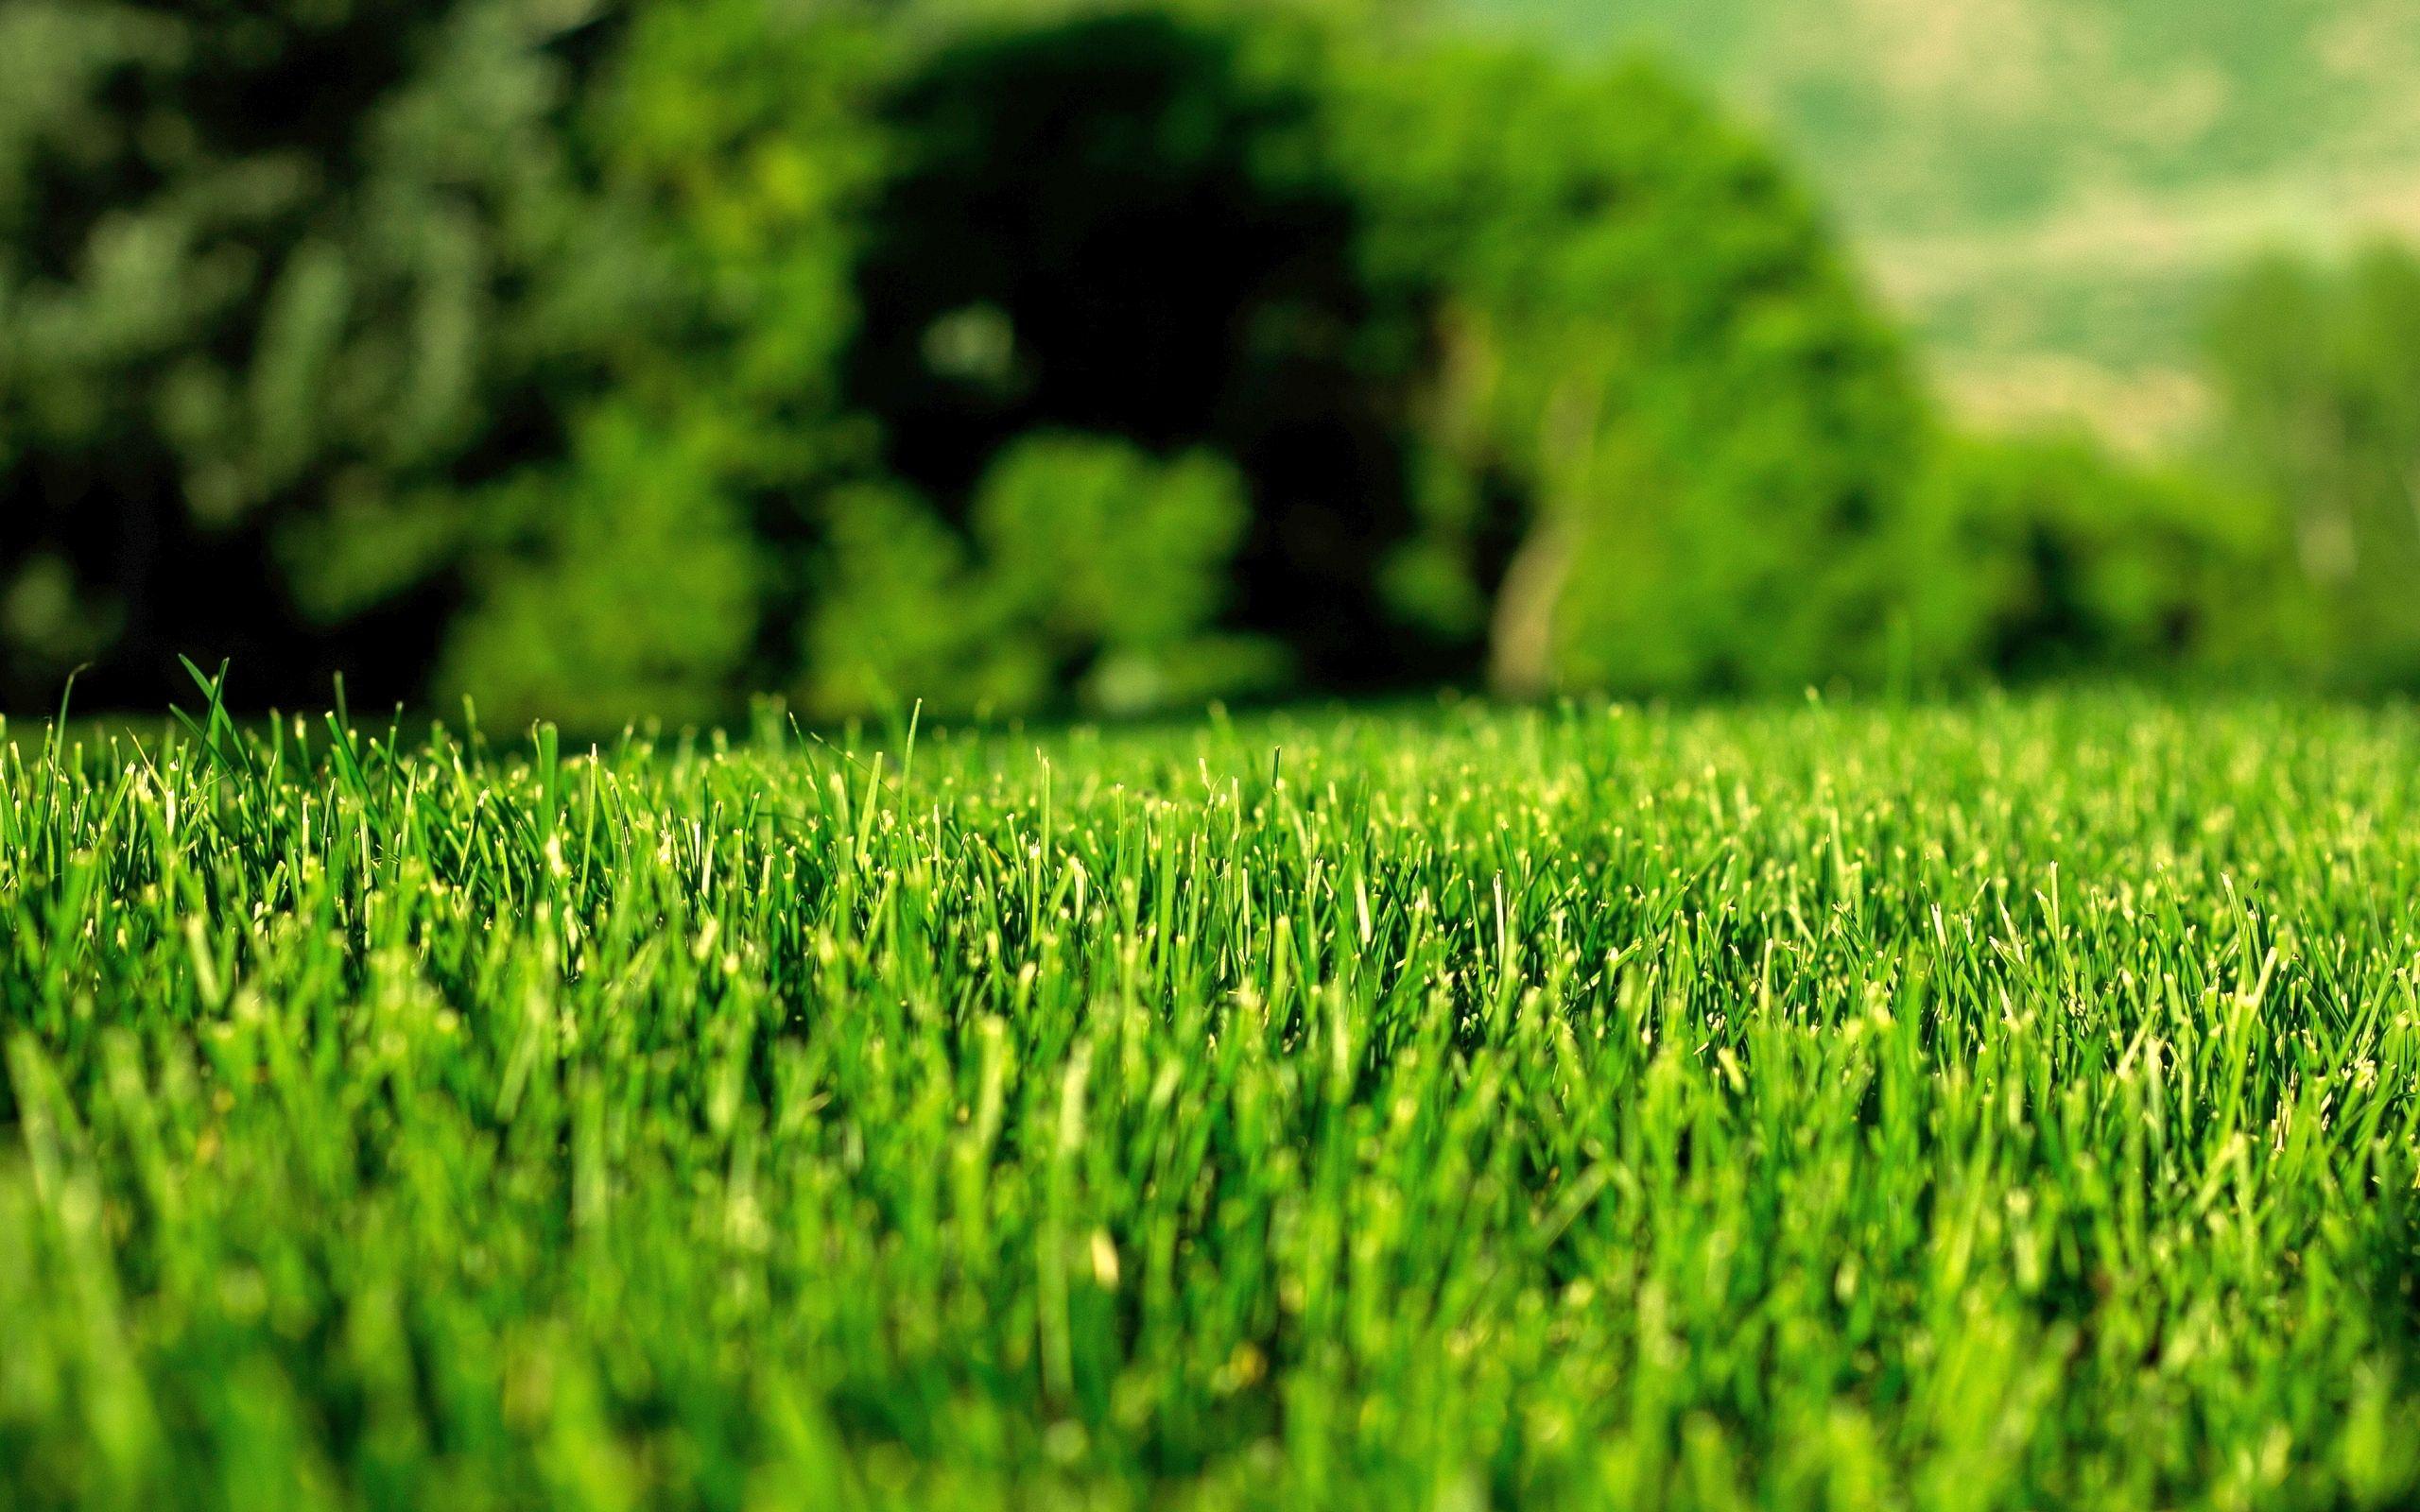 Green Lawn HD Desktop Wallpaper, Instagram photo, Background Image